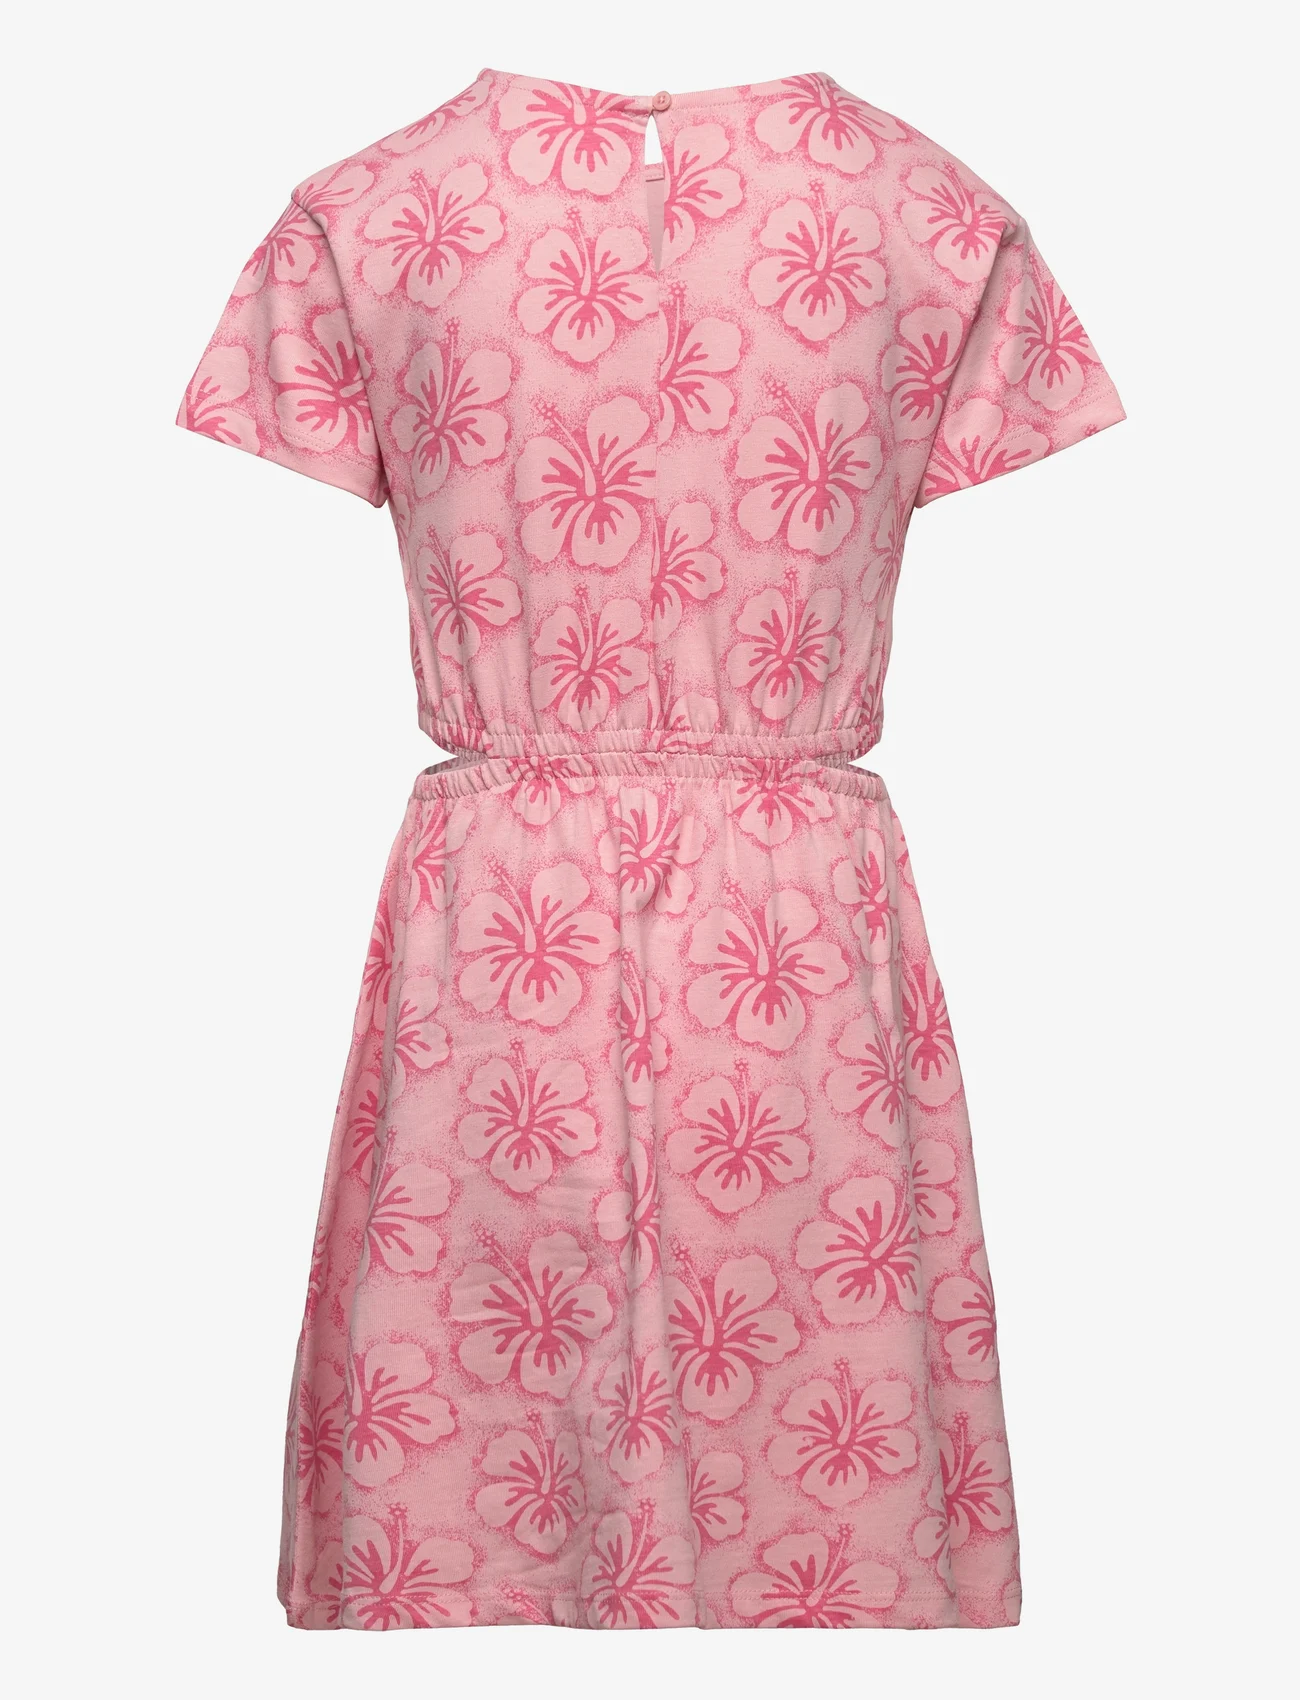 Mango - Printed cut-out detail dress - kortermede hverdagskjoler - pink - 1